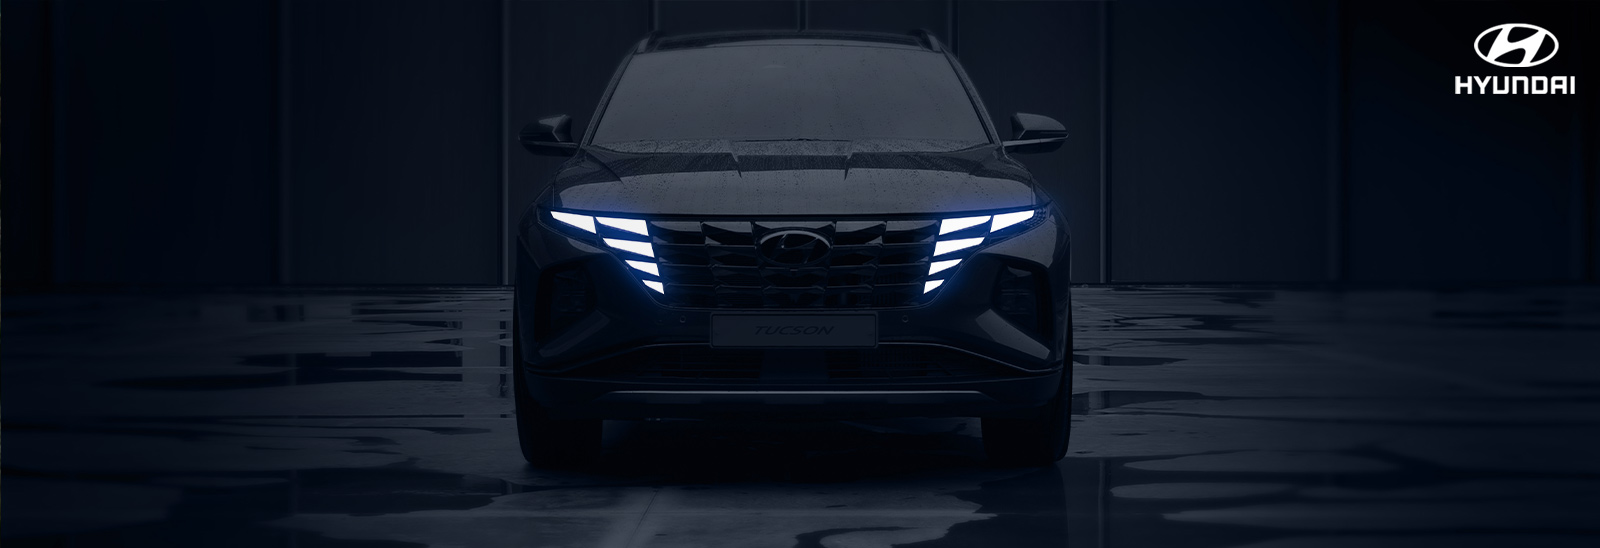 Hyundai Tucson en fondo oscuro